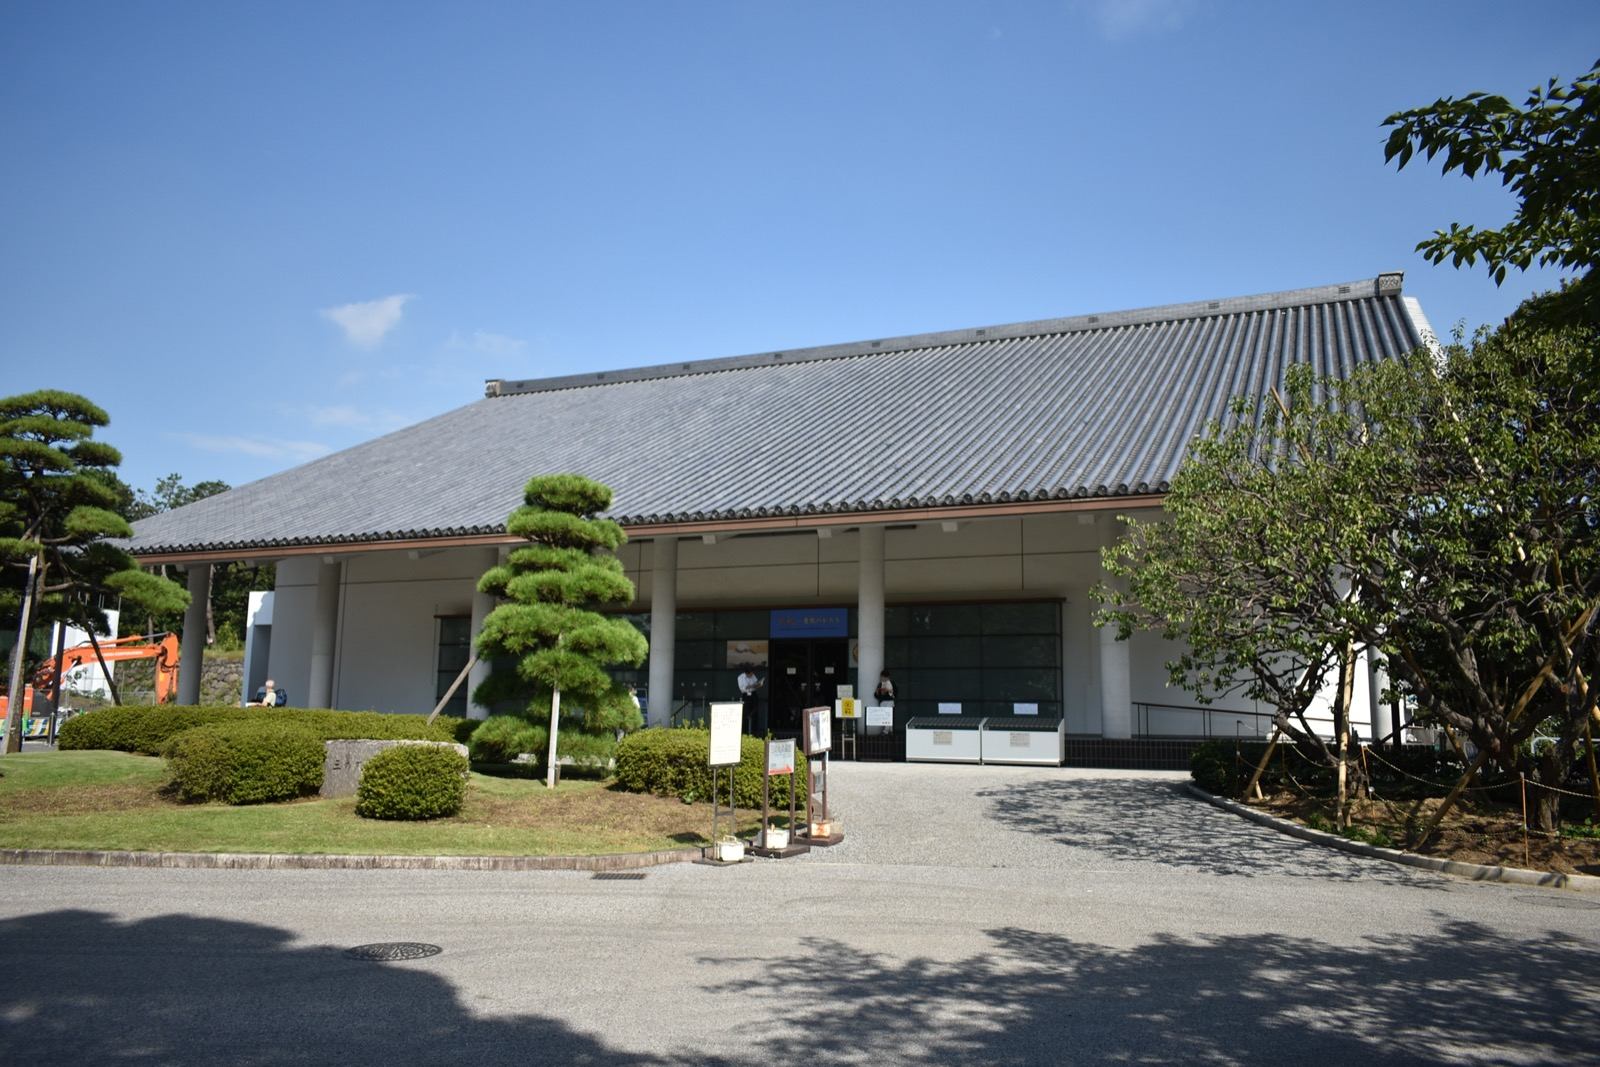 Photo of Sannomaru Shozokan, Japan (三の丸尚蔵館 by 江戸村のとくぞう)